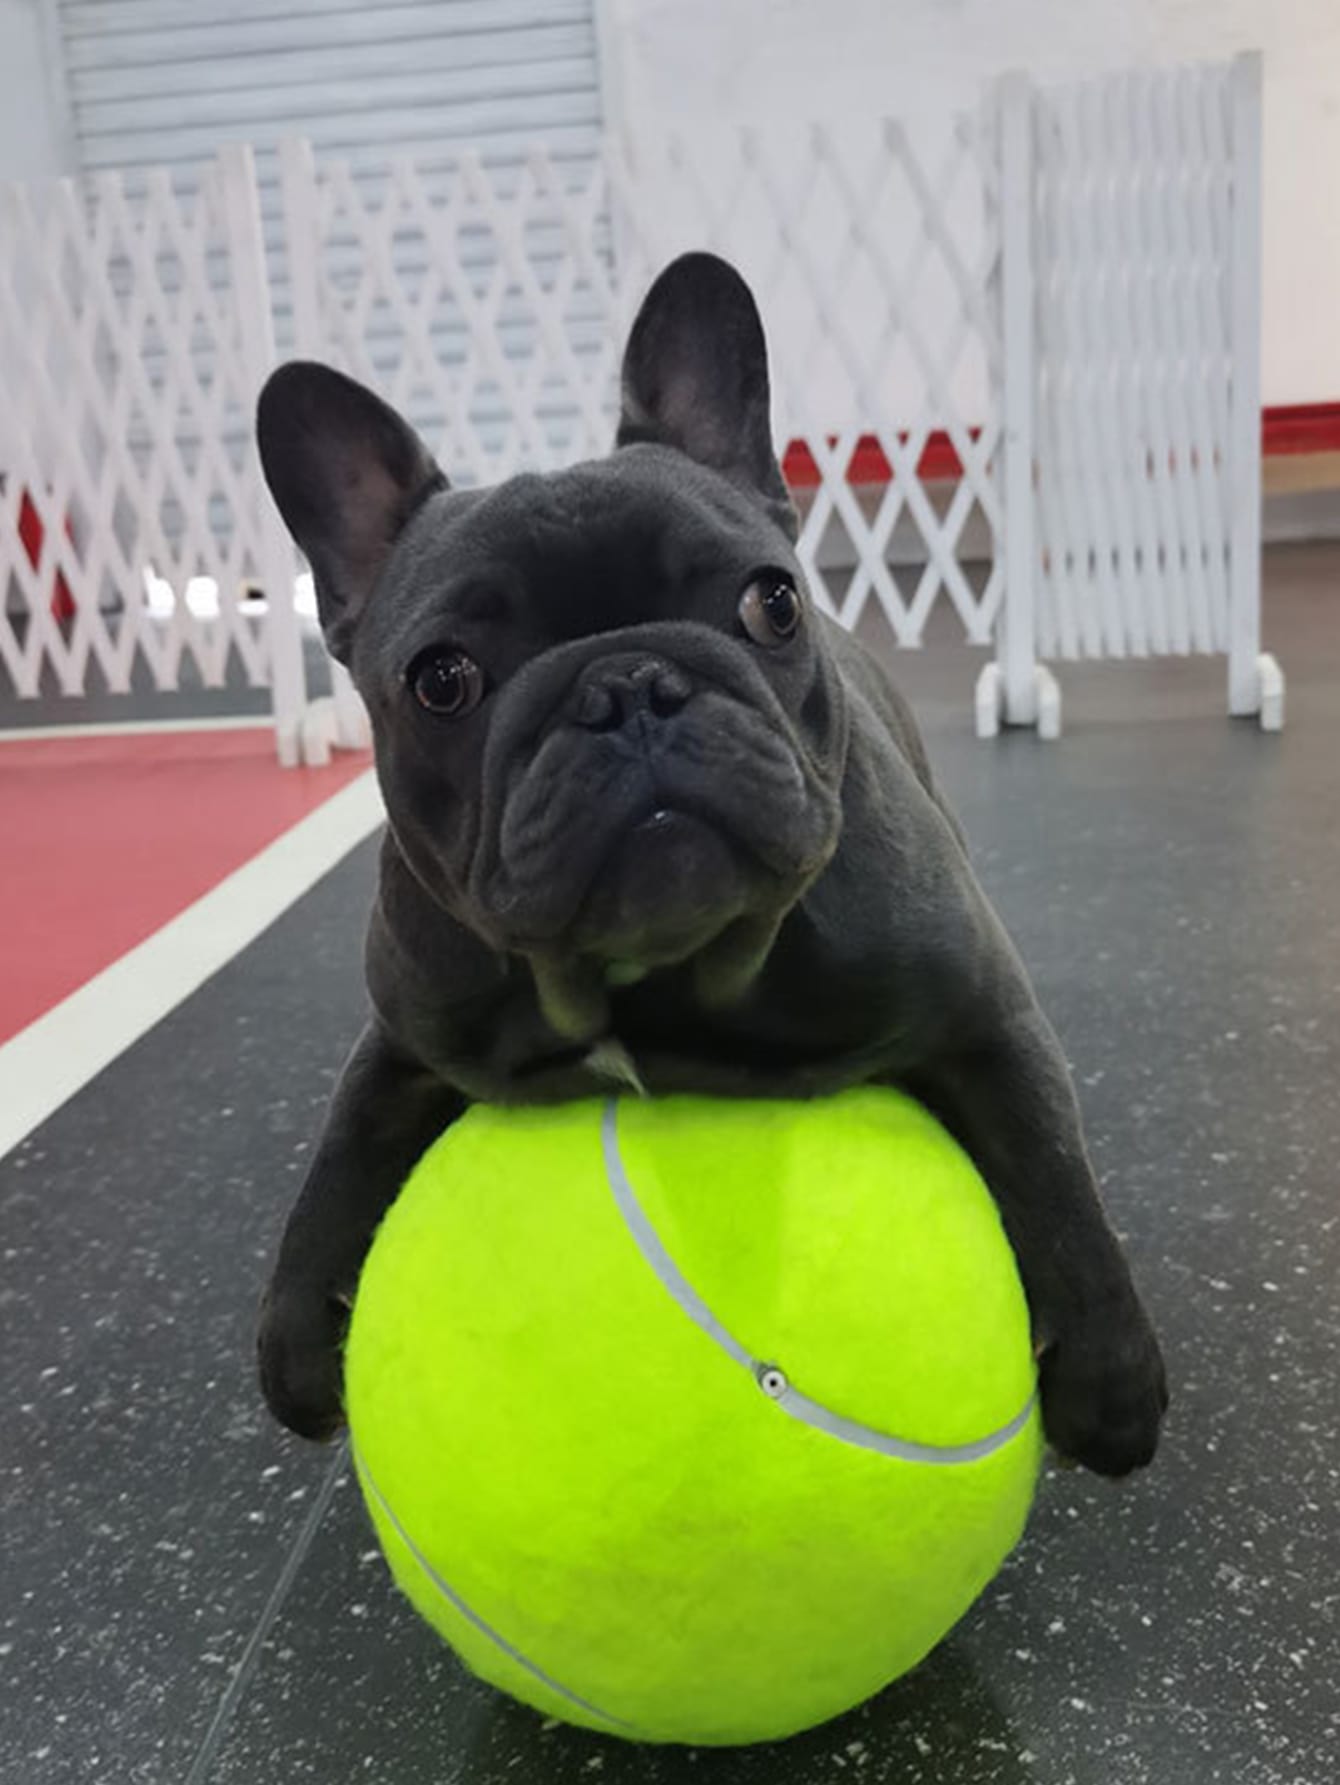 Inflatable Dog Tennis Ball Toy 21cm Diameter